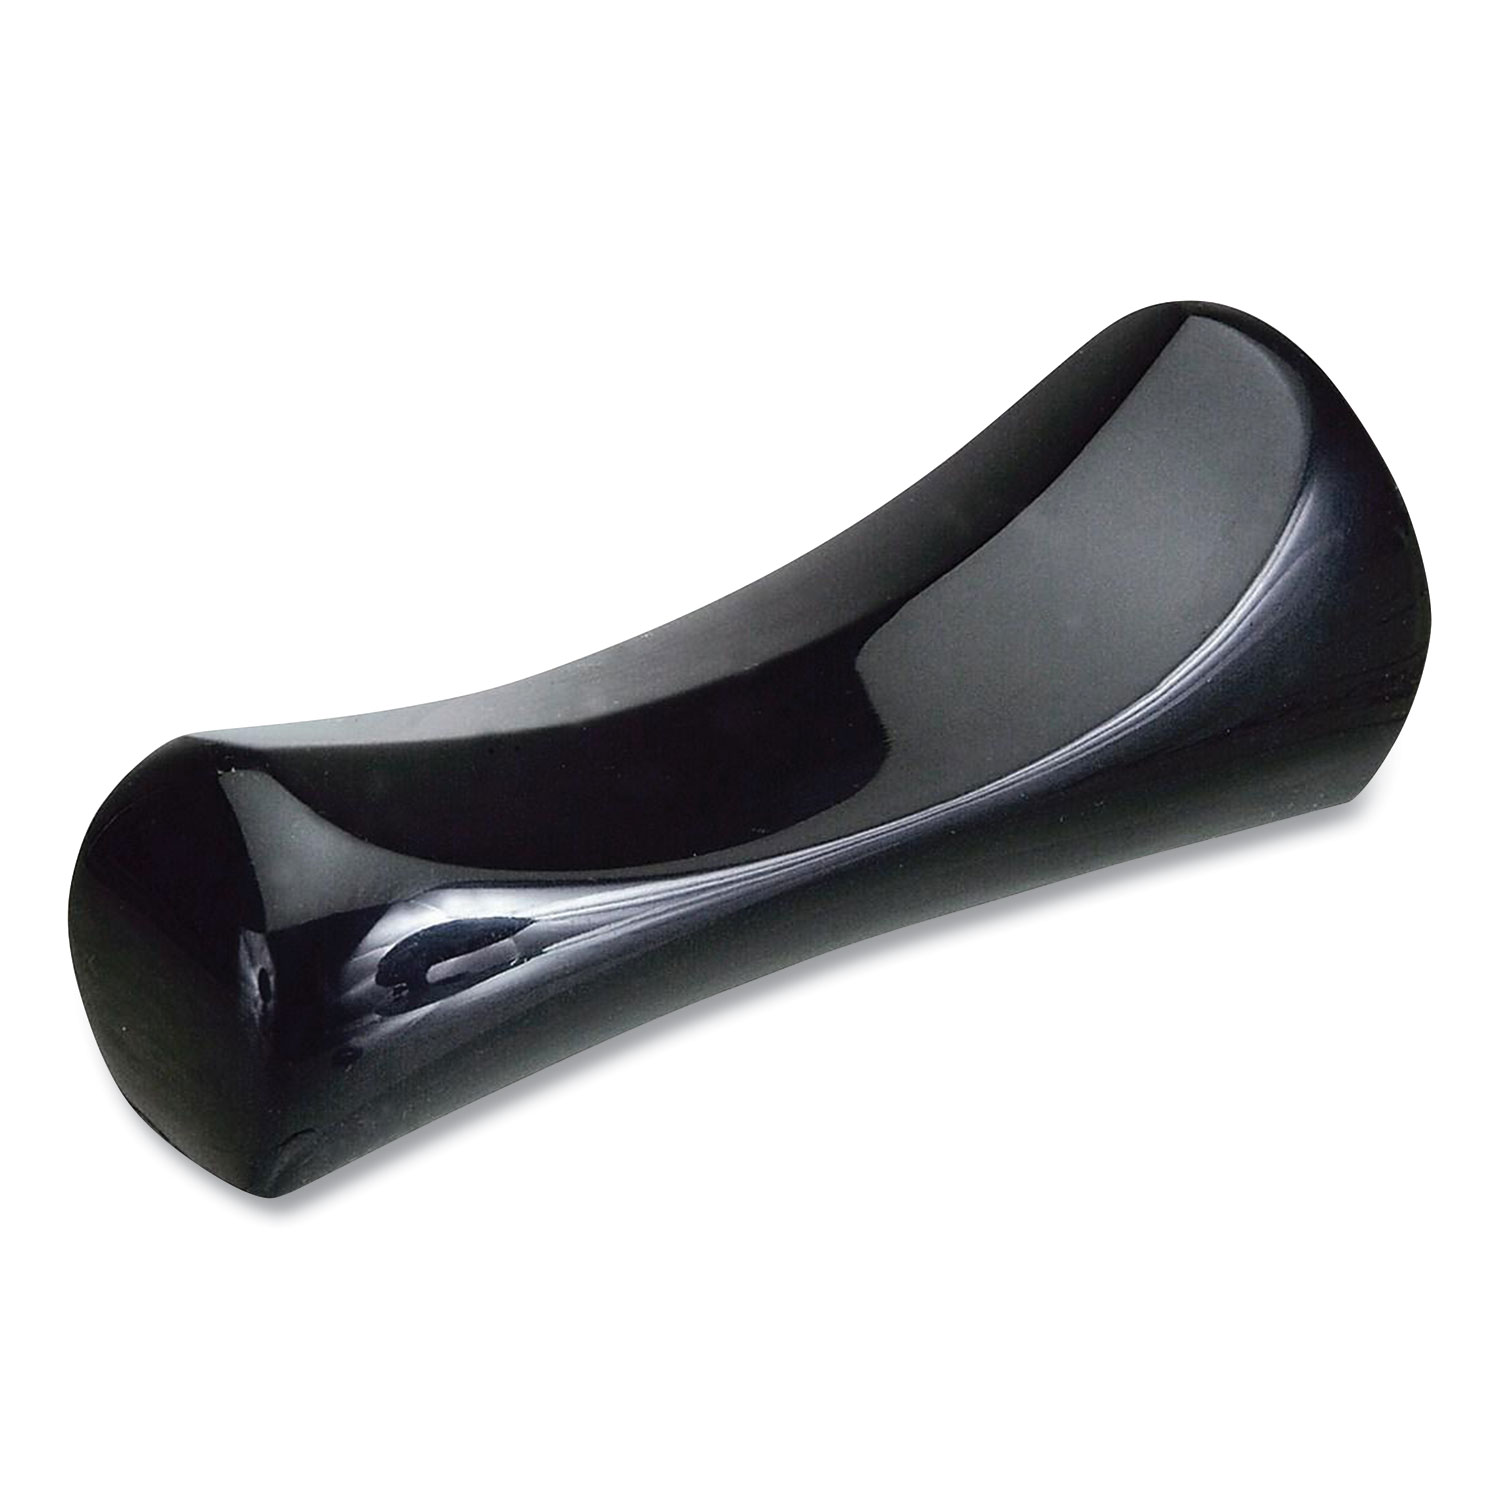 Softalk® Softalk Telephone Shoulder Rest, Black